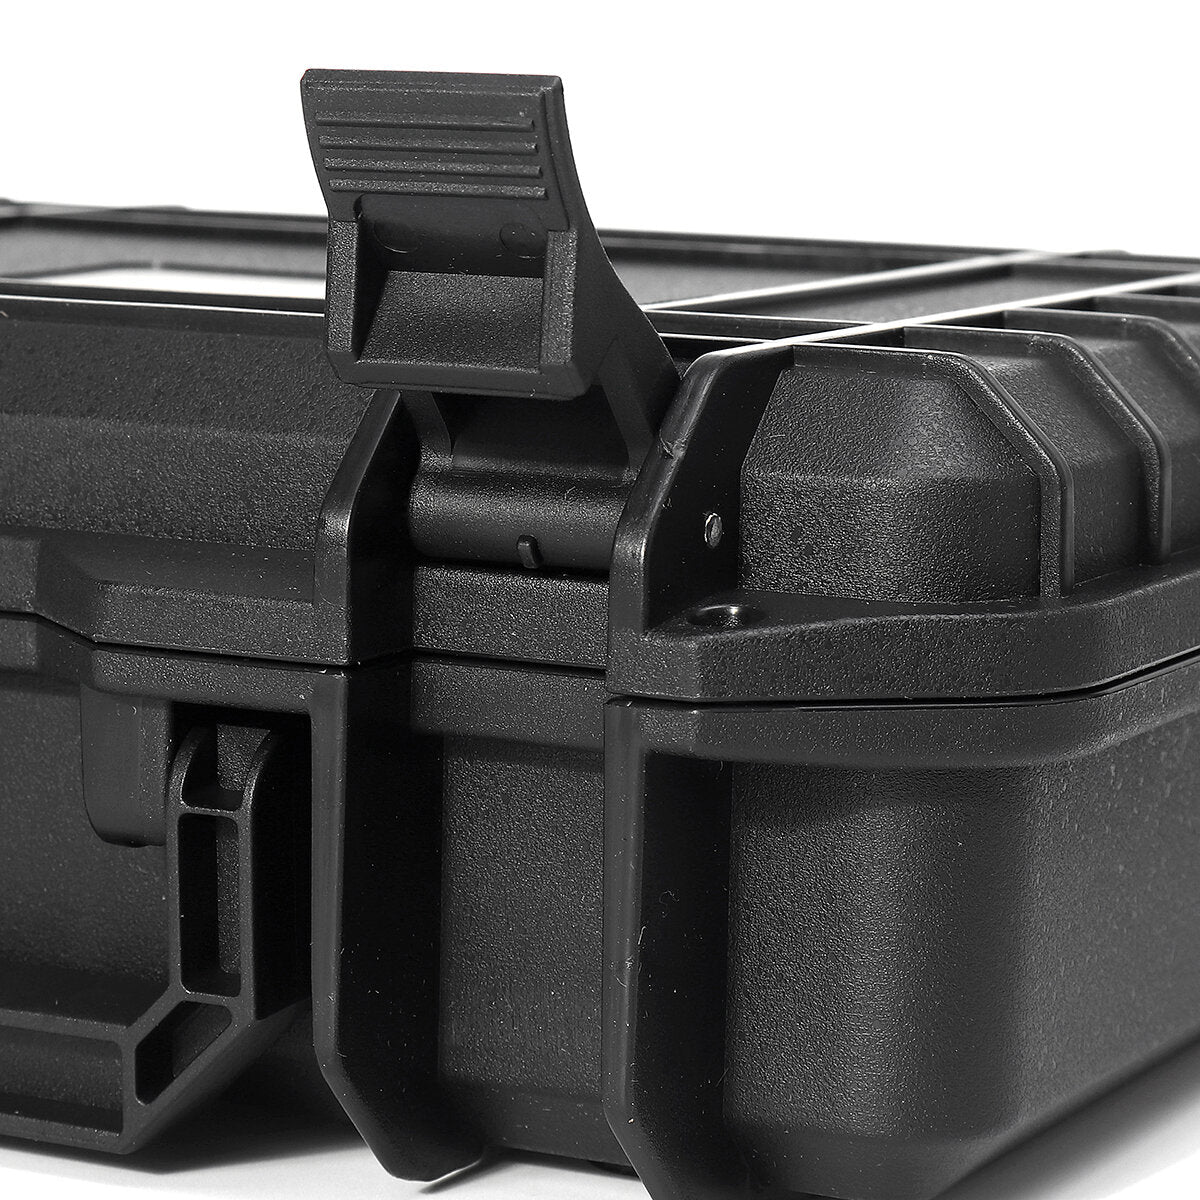 335*275*120mm waterdichte hand carry tool case bag opbergdoos camera fotografie w/spons